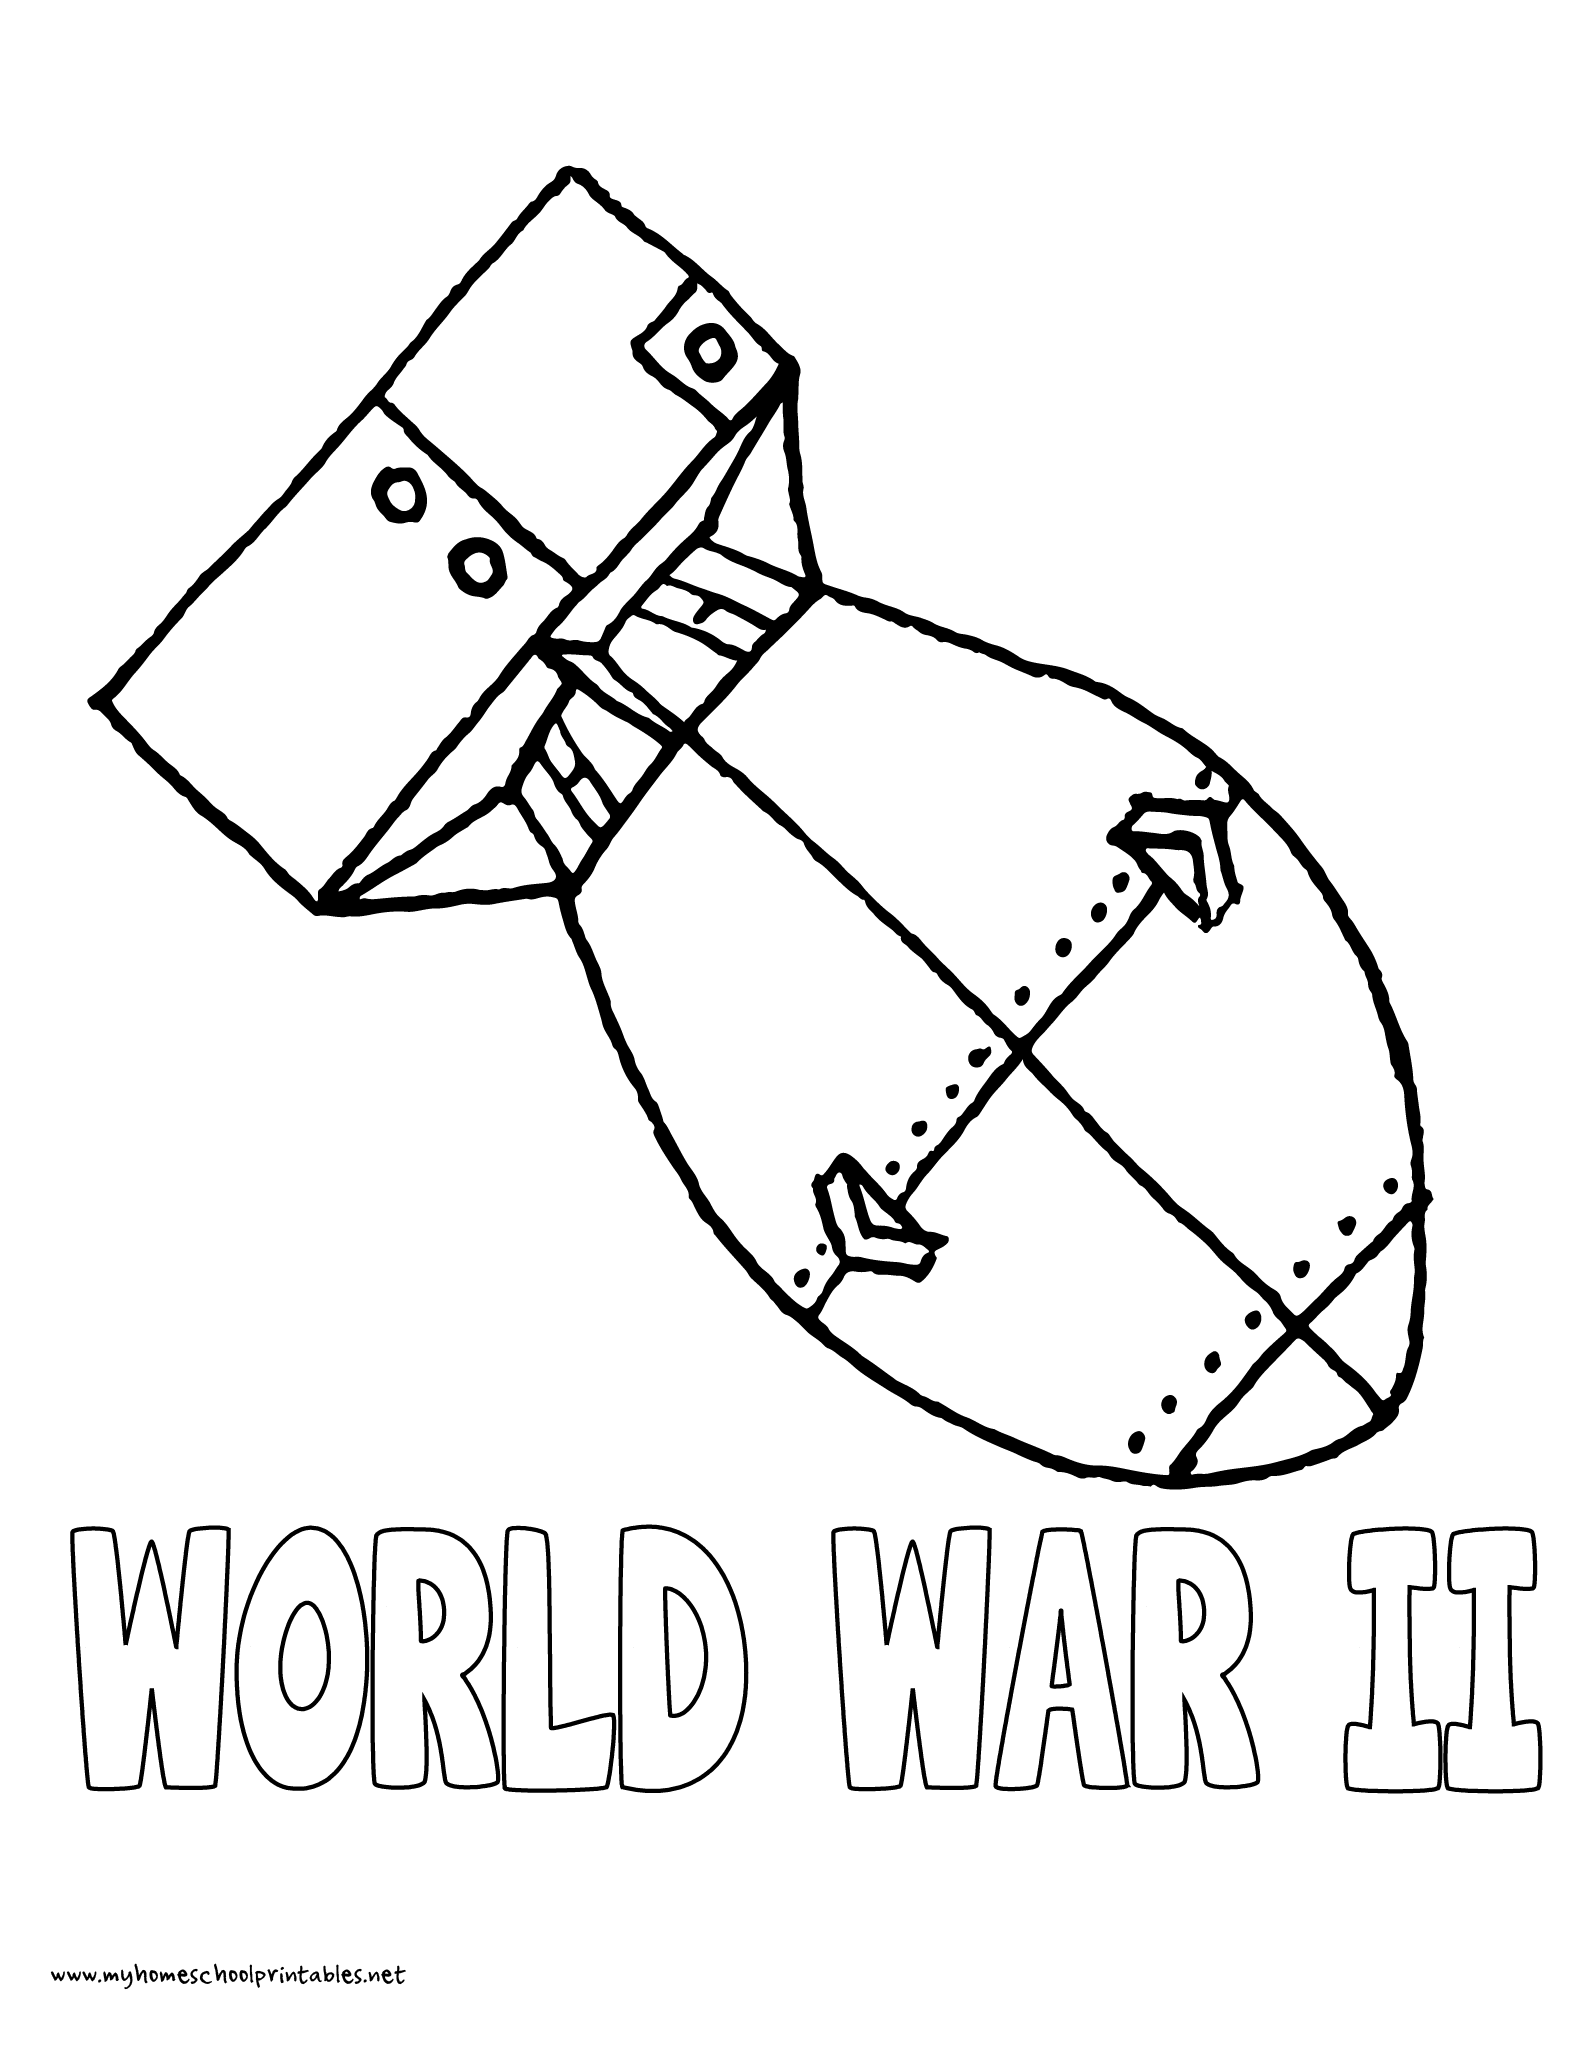 world war 2 colouring pages world war 2 coloring pages coloring for kids coloring pages colouring world war 2 